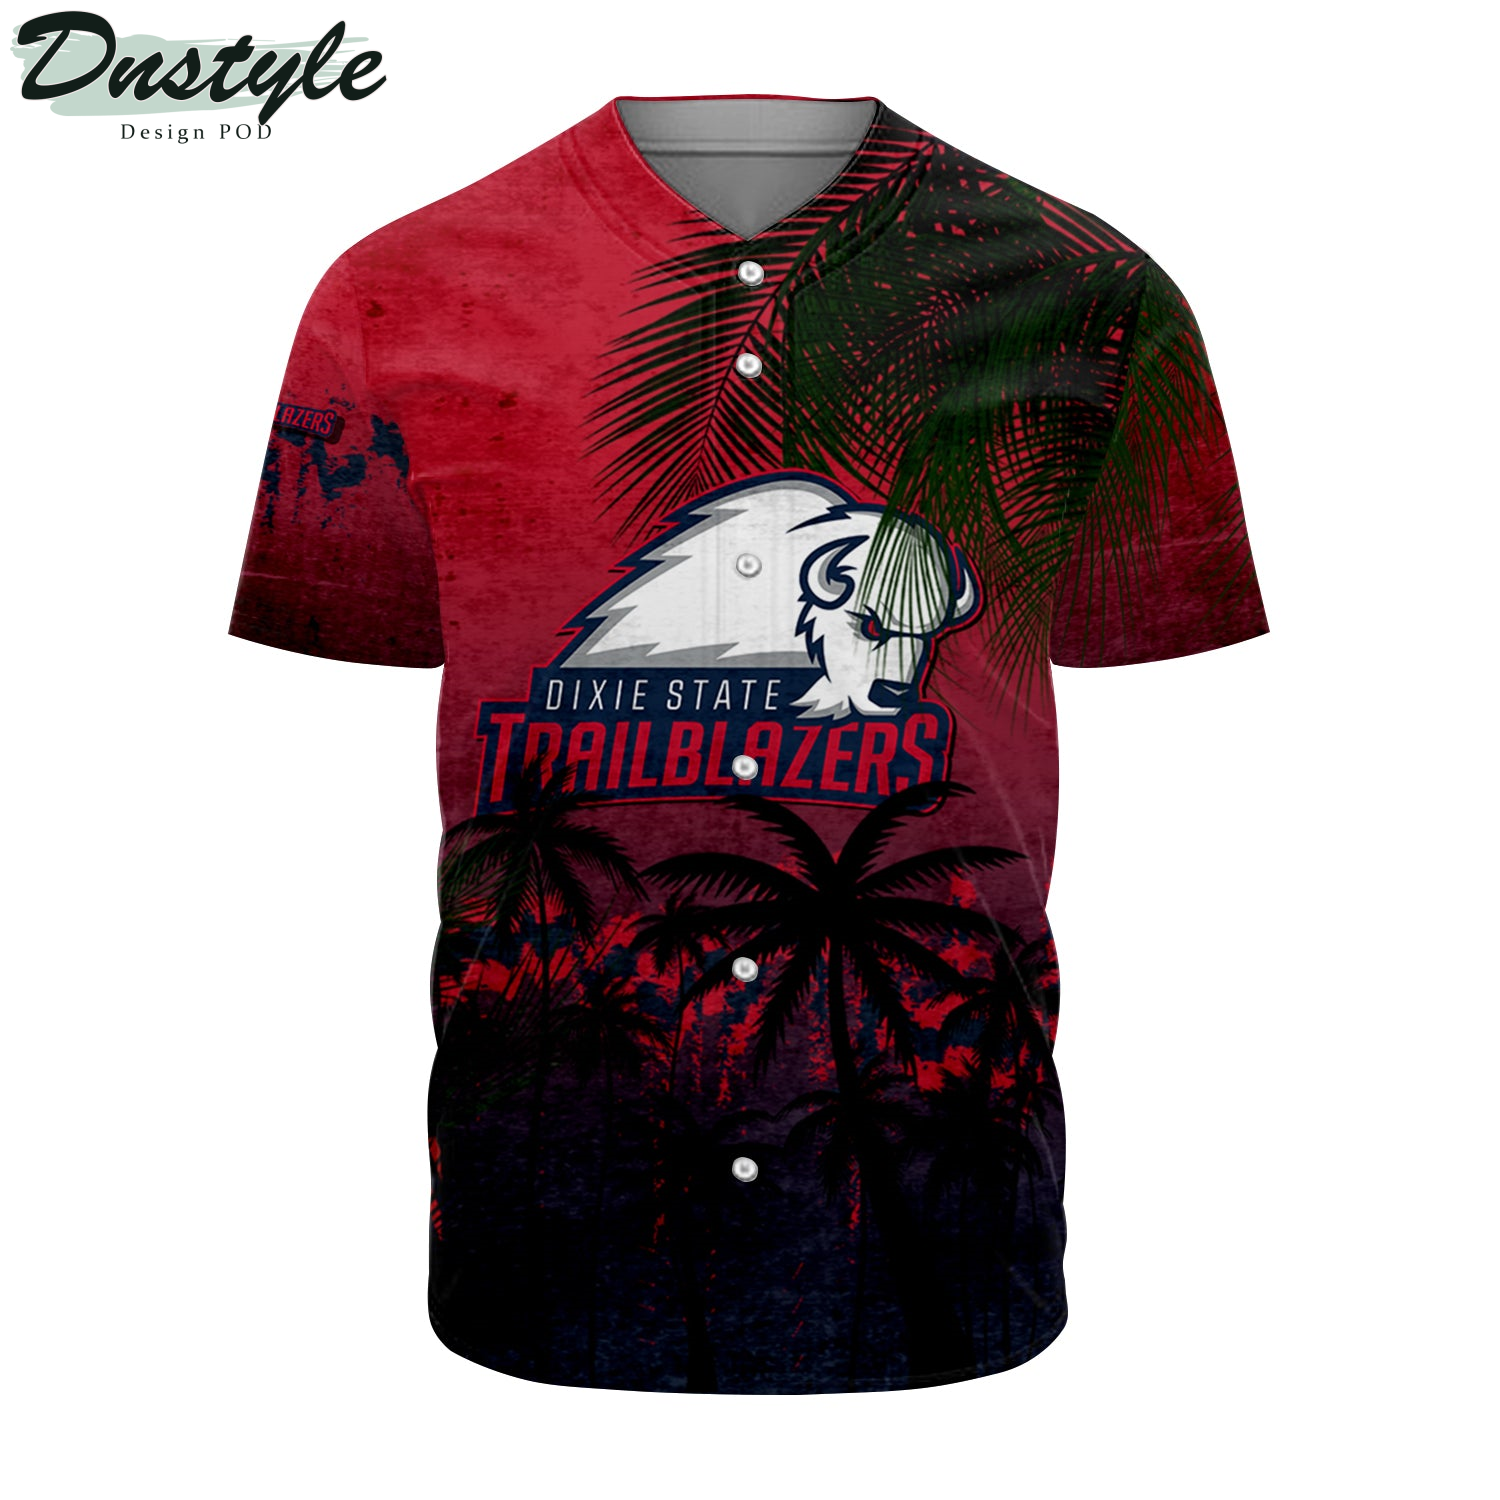 Dixie State Trailblazers Coconut Tree Tropical Grunge Baseball Jersey